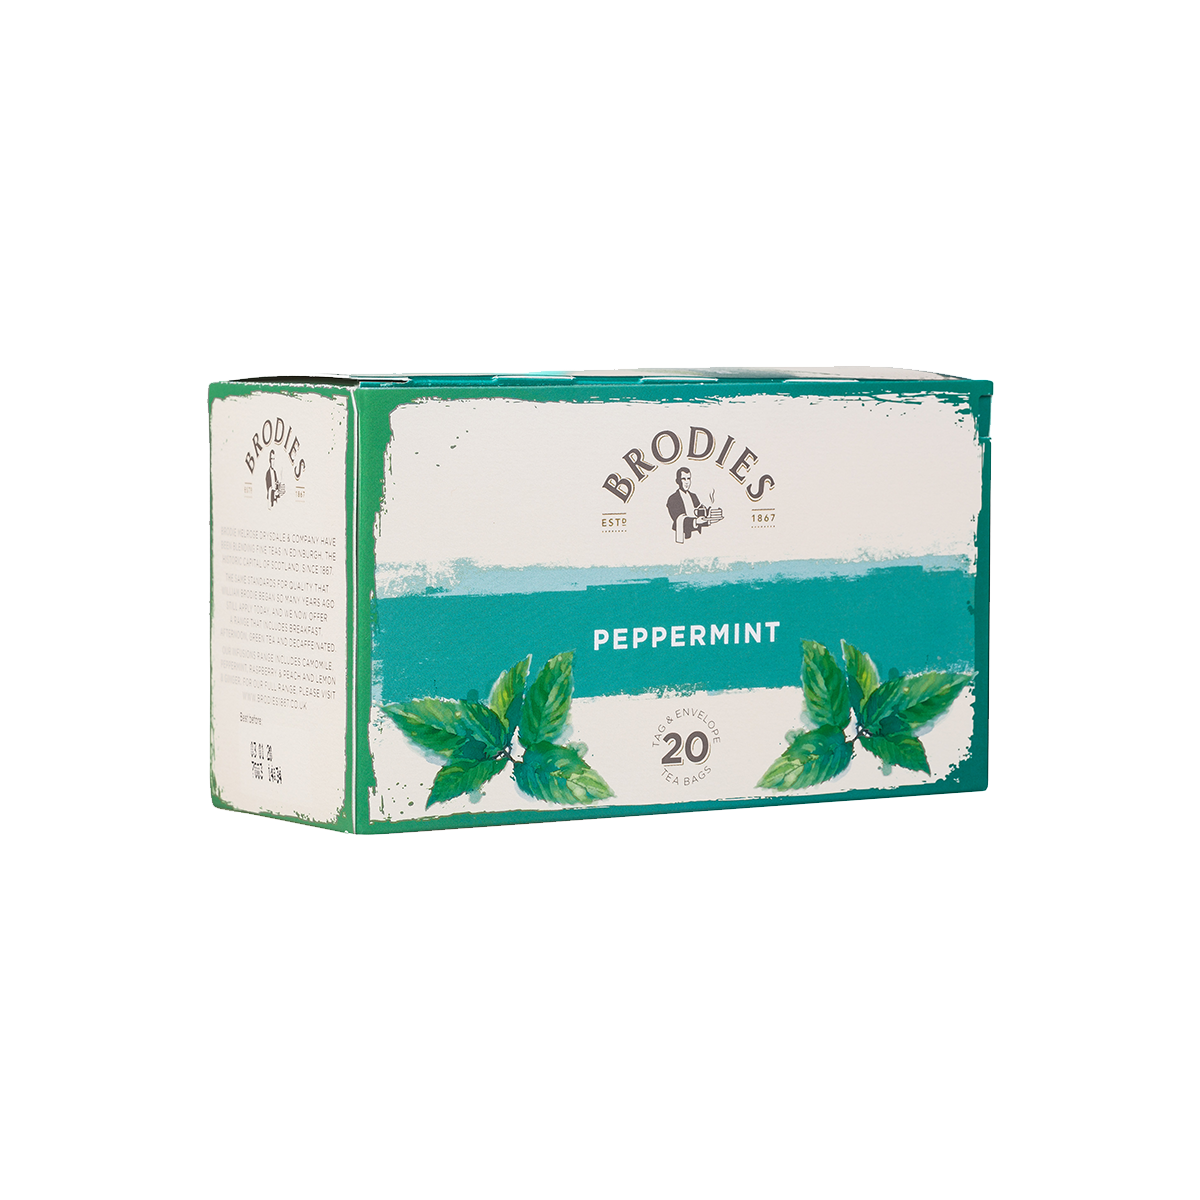 Brodies - Peppermint Tea